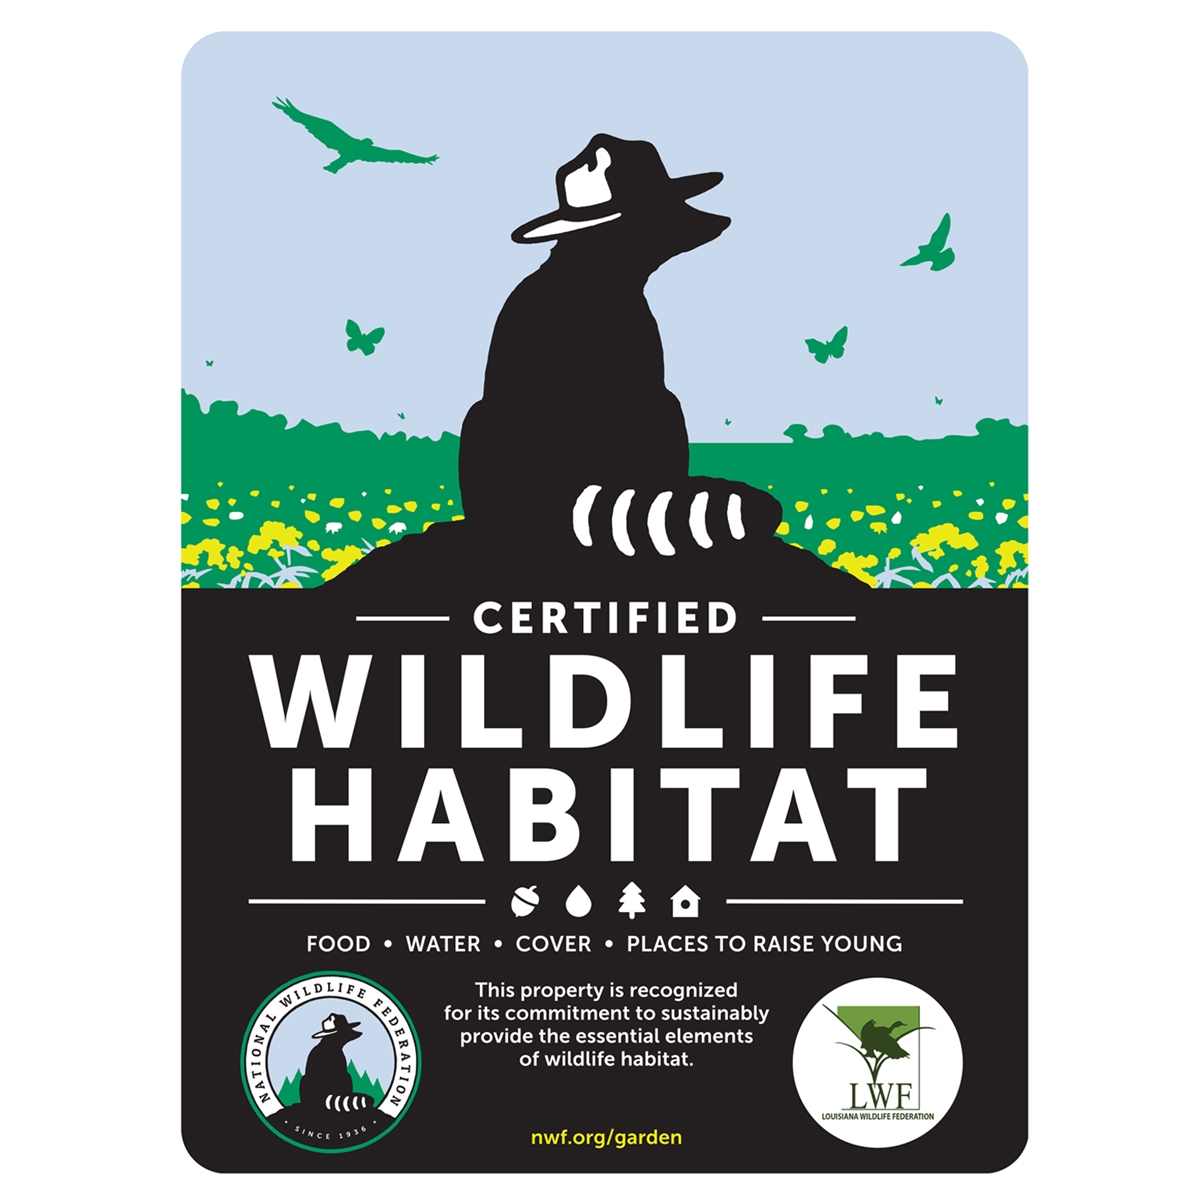 Louisiana Wildlife Federation Certified Wildlife Habitat Sign